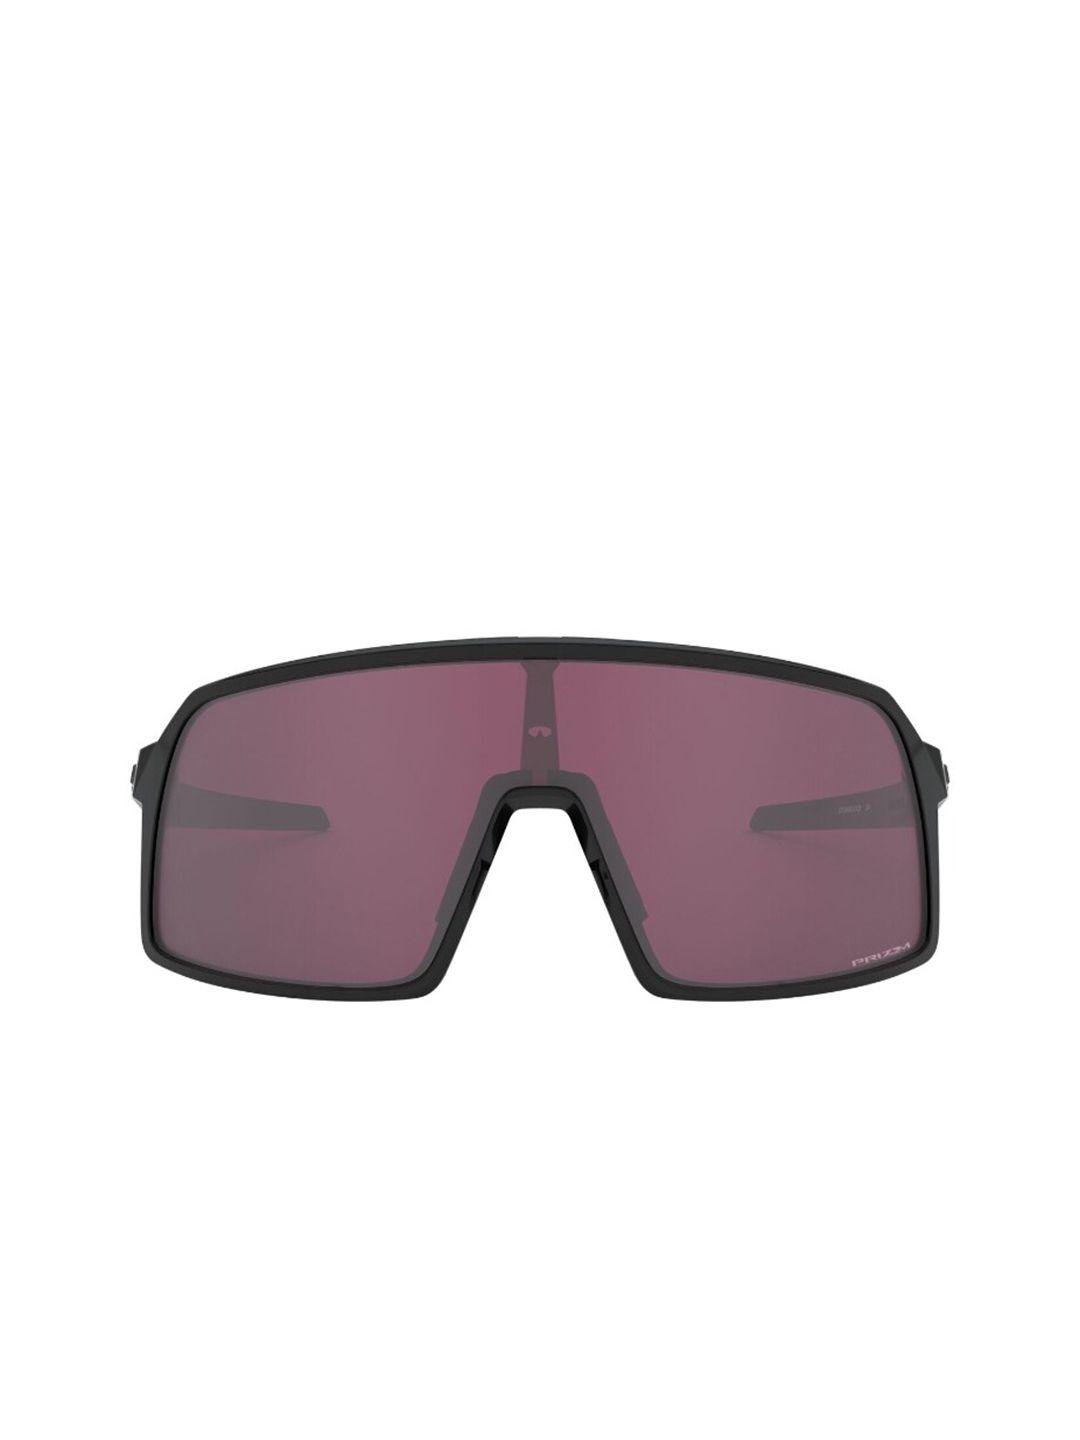 oakley men lens & shield sunglasses with uv protected lens